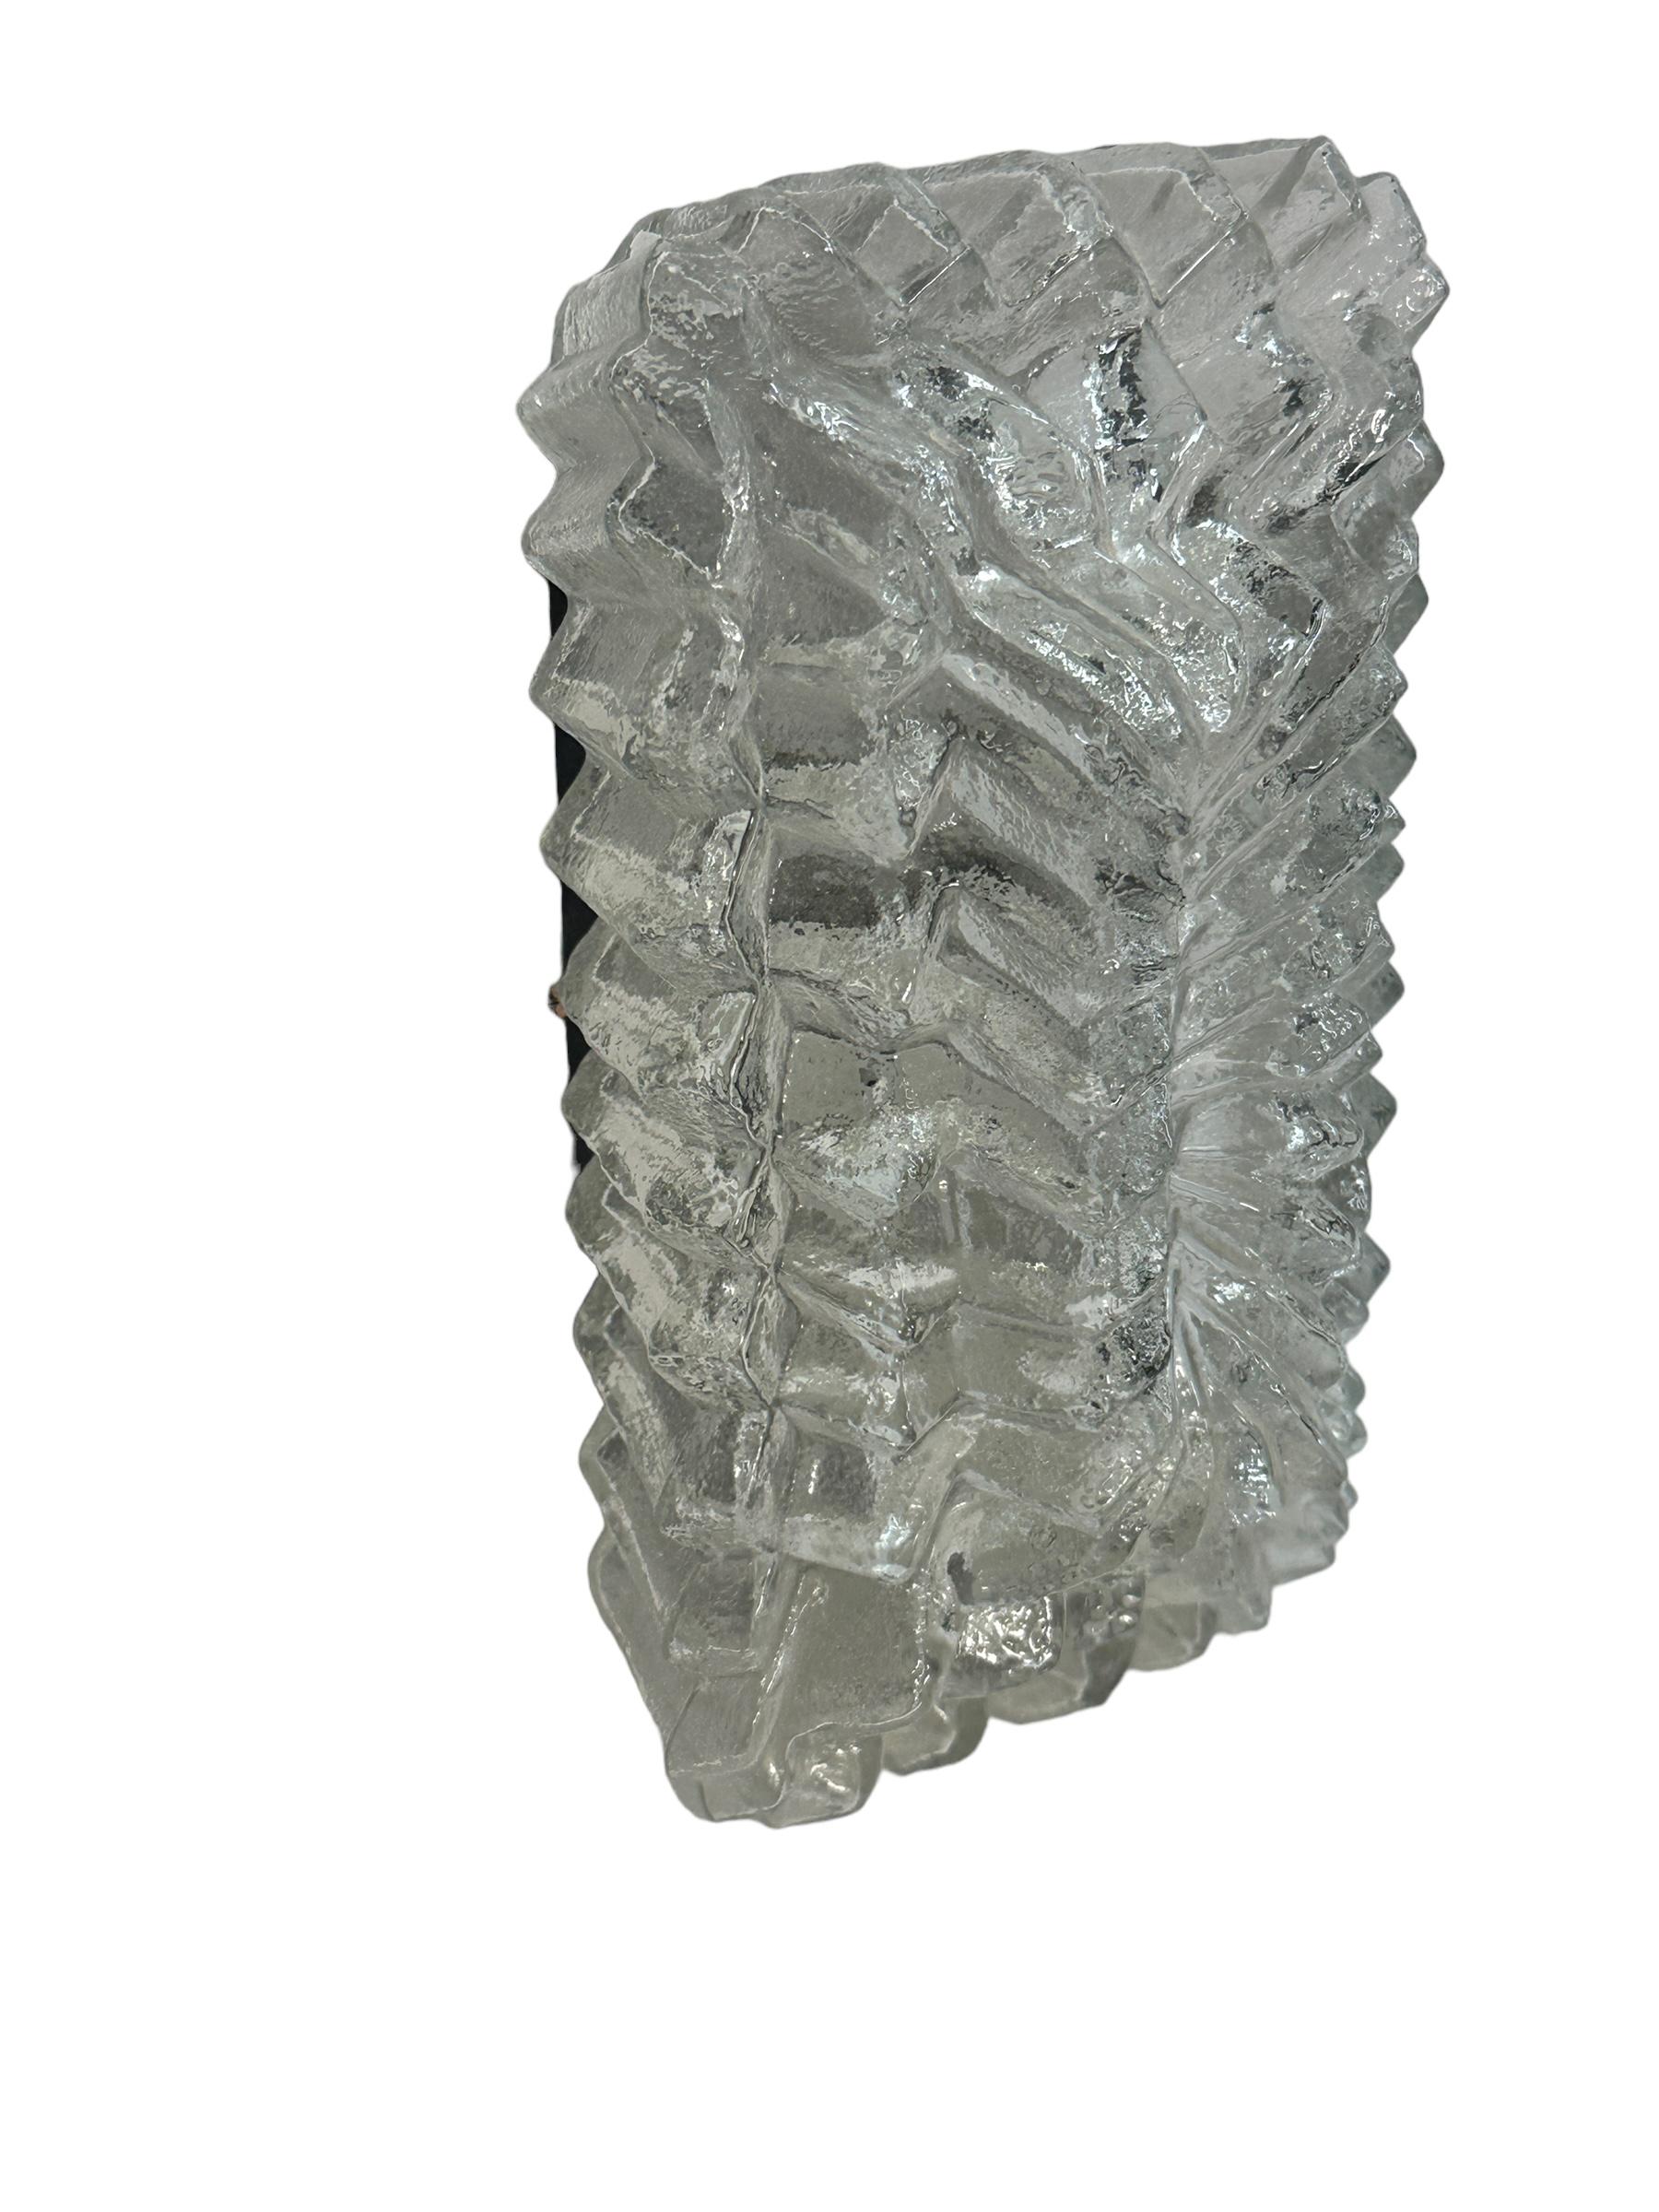 Ice Crystal Block Glass Sconce Vintage German, 1960s RZB Leuchten For Sale 1